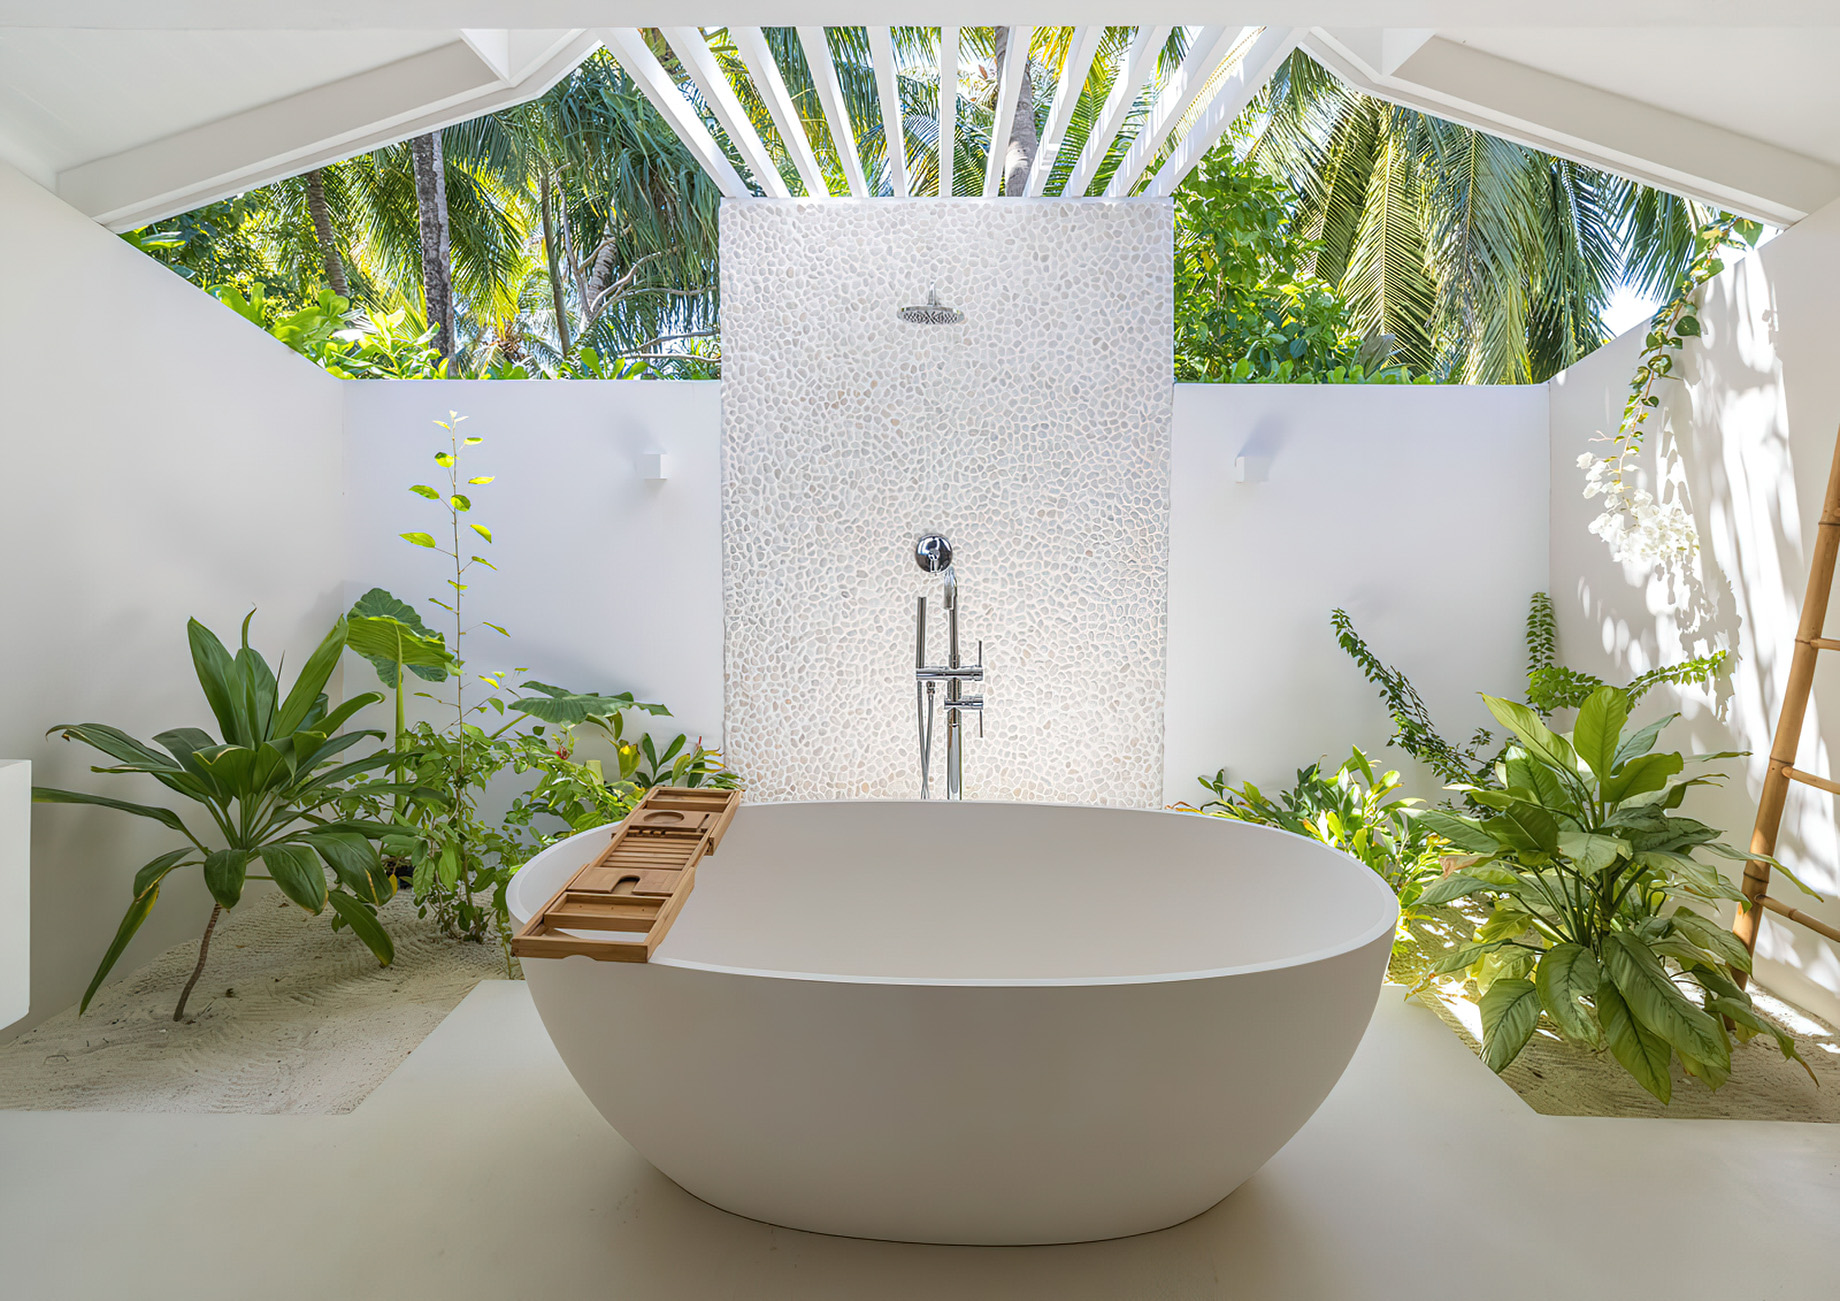 Baglioni Resort Maldives – Maagau Island, Rinbudhoo, Maldives – Beach Pool Villa Outdoor Bathroom Tub